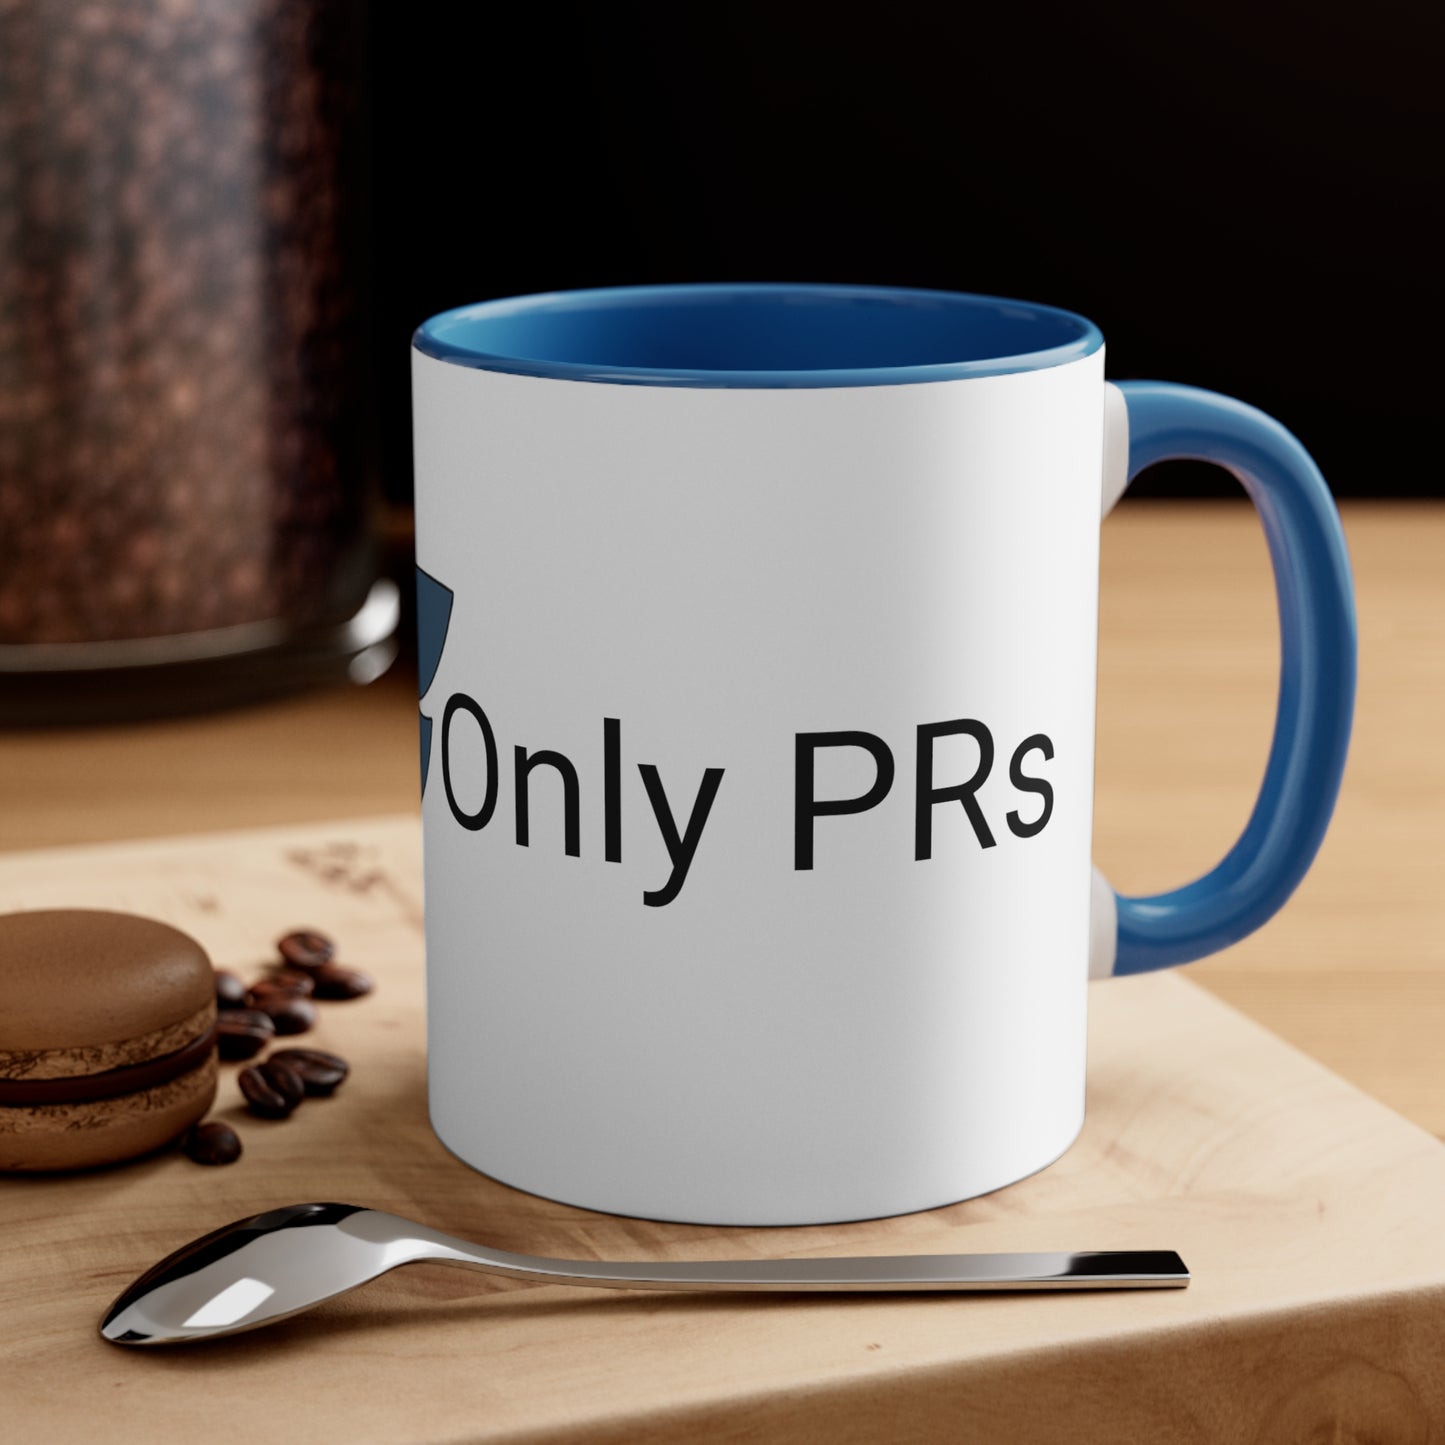 Only PRs Accent Coffee Mug, 11oz